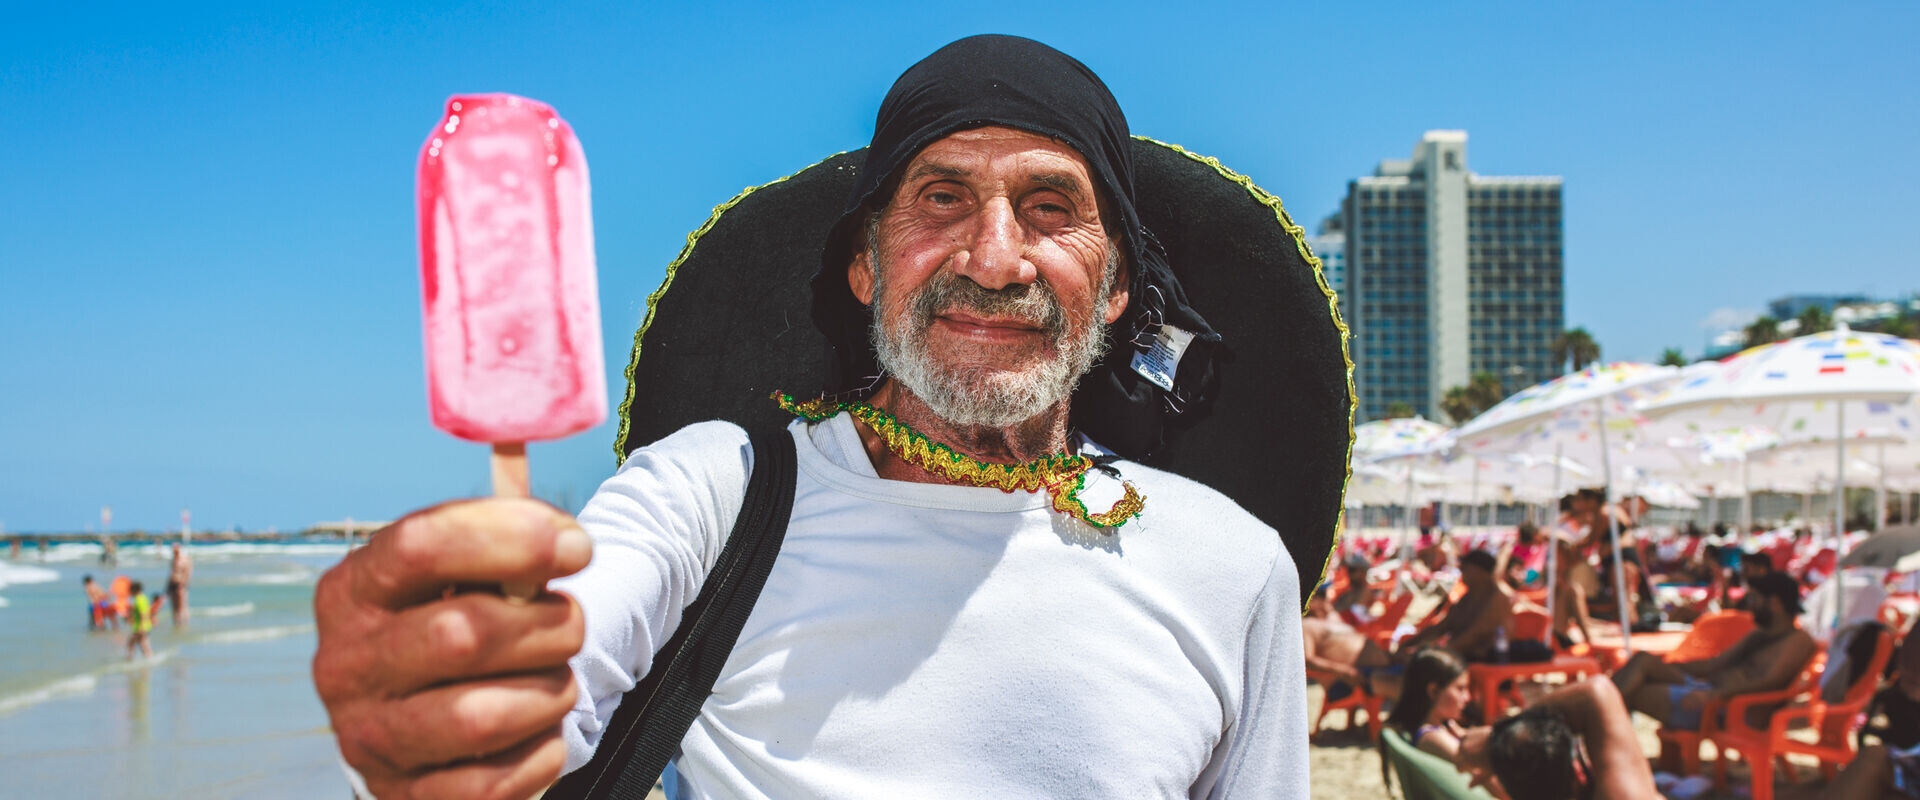 שמעון אלון (שמעון ארטיק) בחוף פרישמן בתל אביב (צילום: עופר חן)